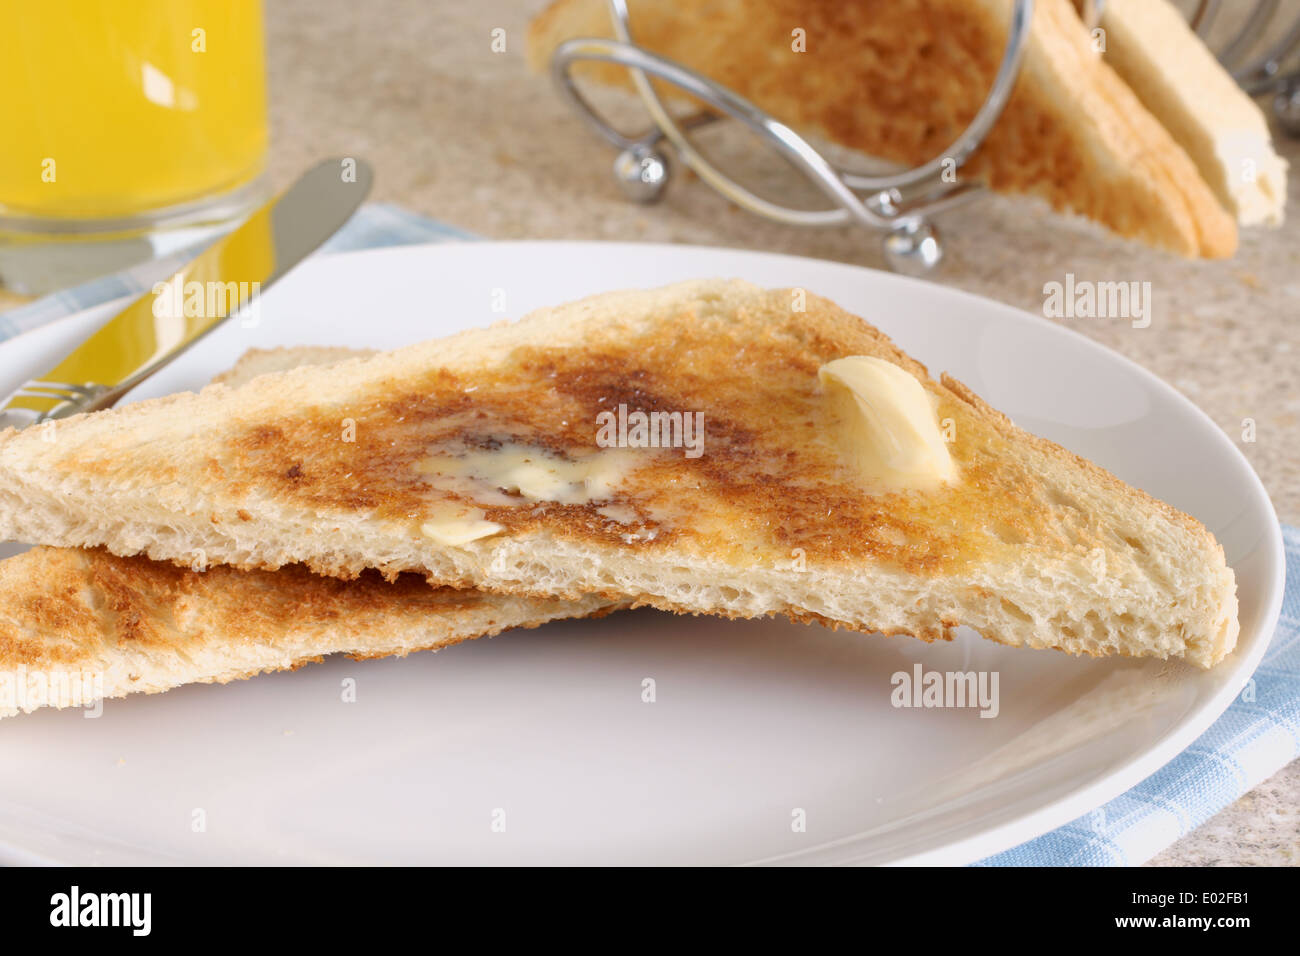 https://c8.alamy.com/comp/E02FB1/white-bread-toast-with-melting-butter-orange-juice-and-a-toast-rack-E02FB1.jpg